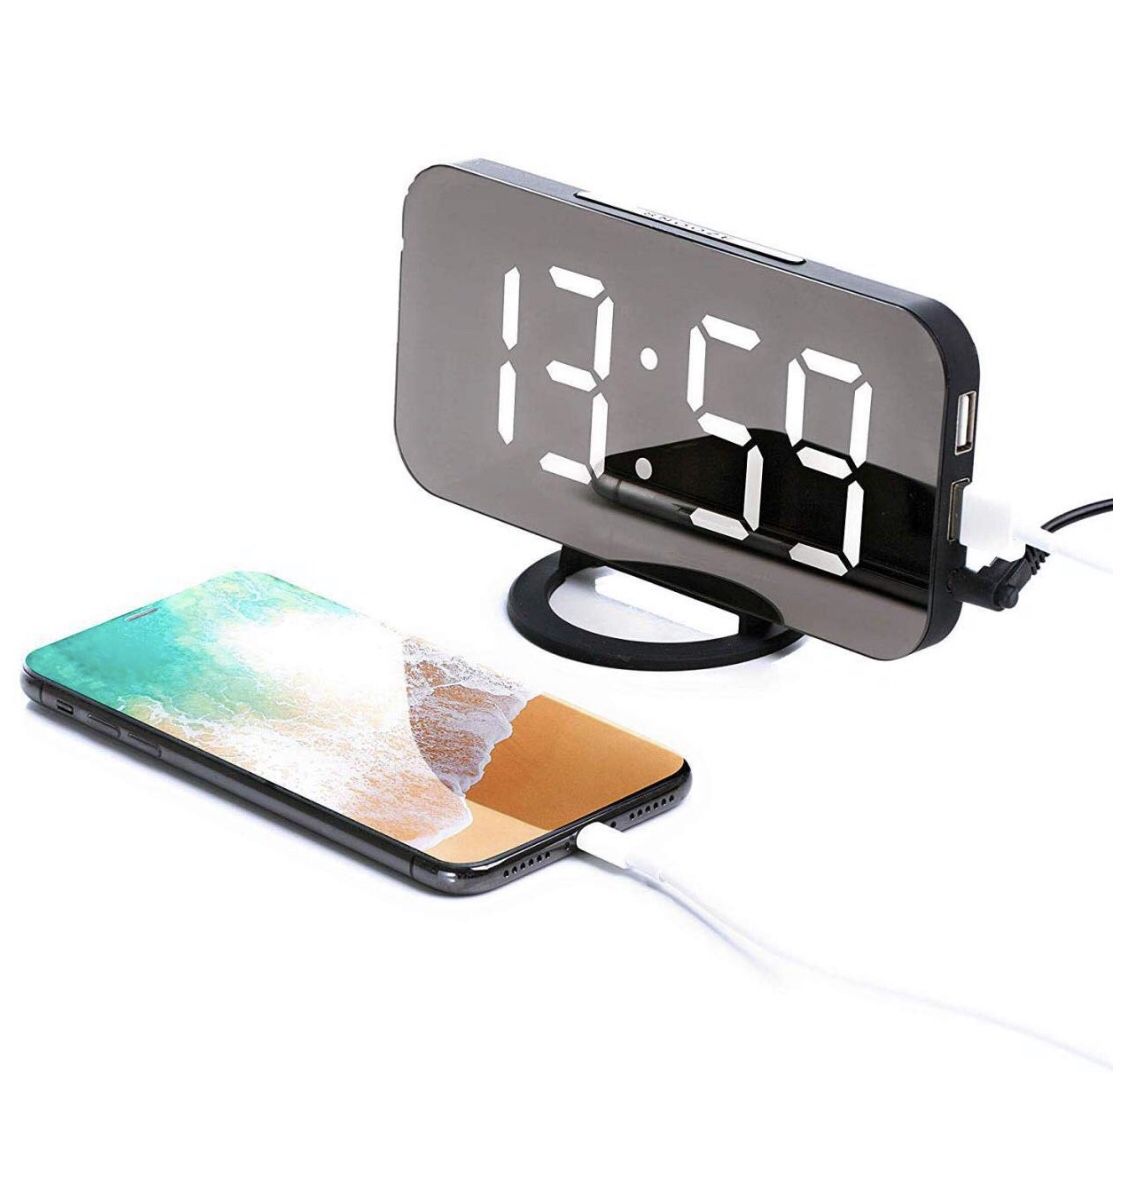 Digital Alarm Clock - Stylish led Clock with 2 USB Ports - 6.5 inch Display Stylish led with Automatic Brightness Control. ***NEW